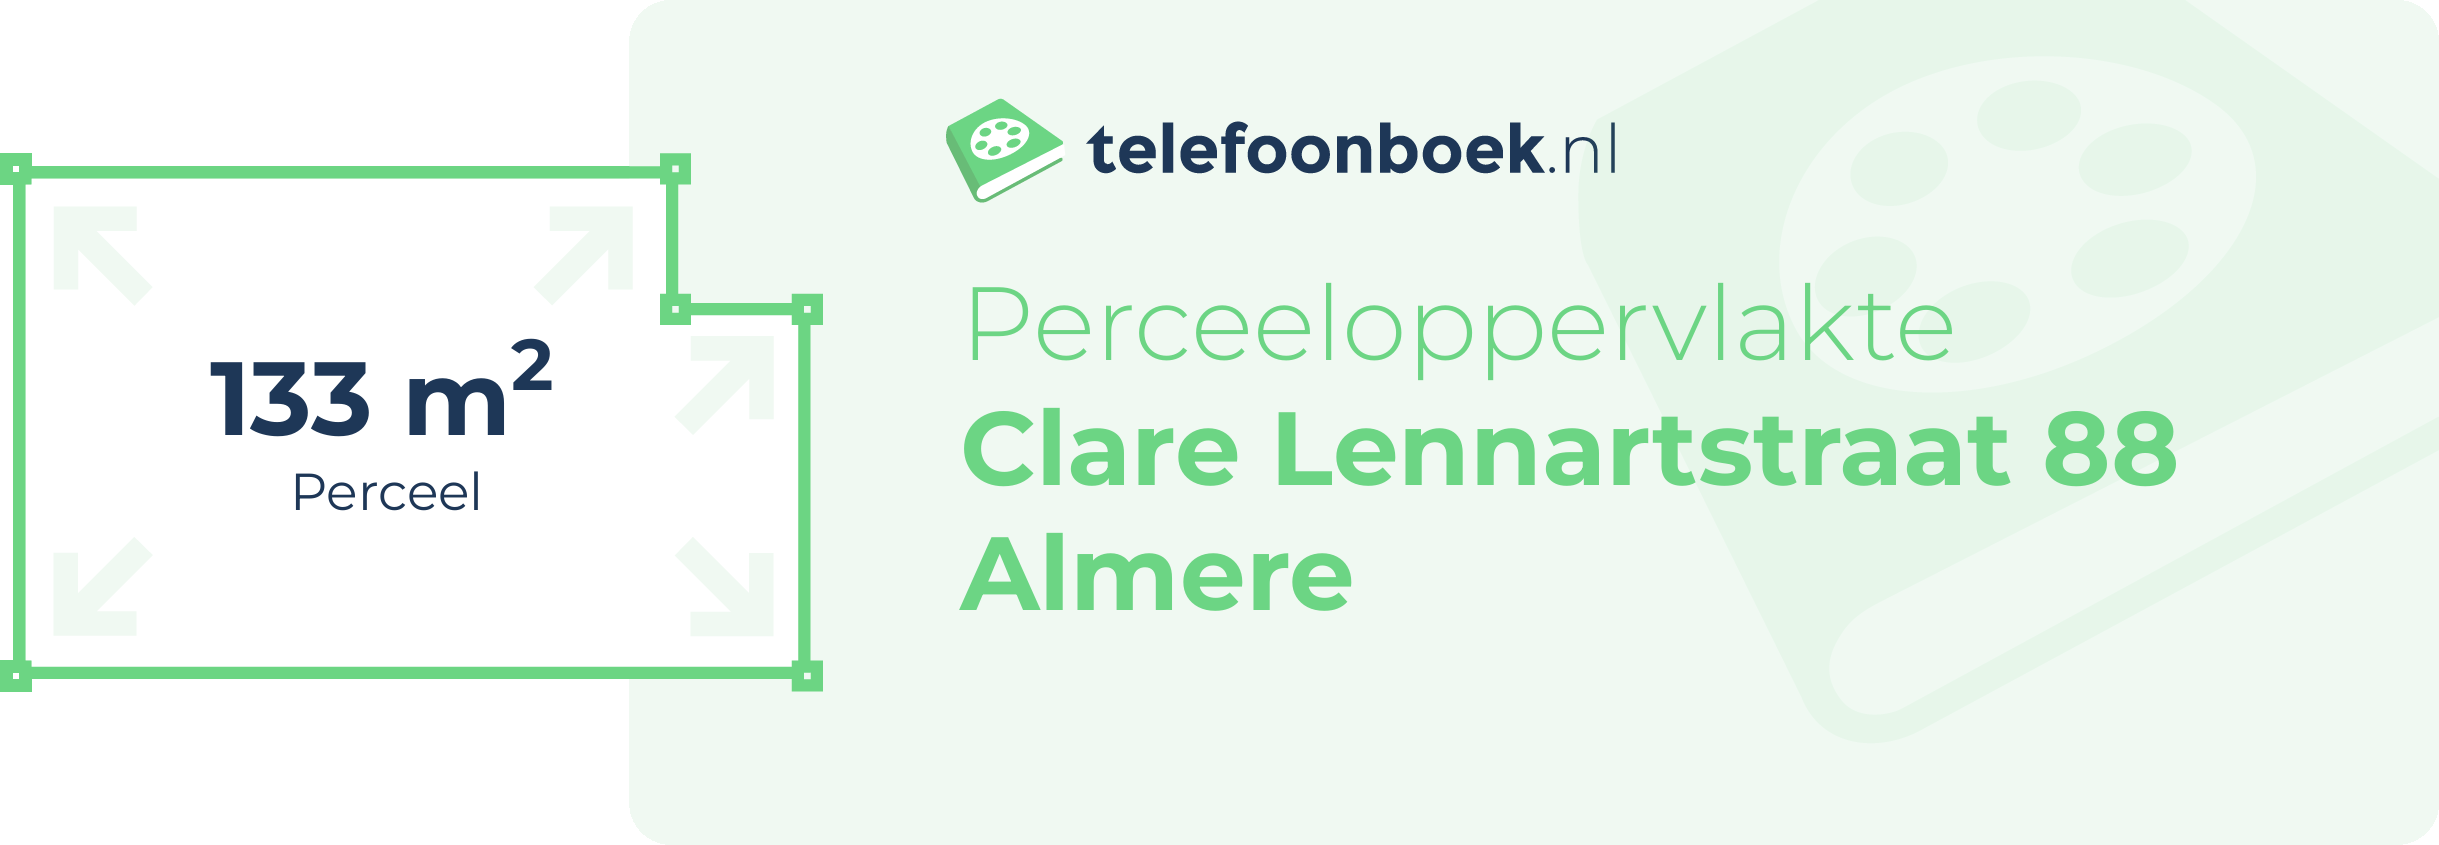 Perceeloppervlakte Clare Lennartstraat 88 Almere